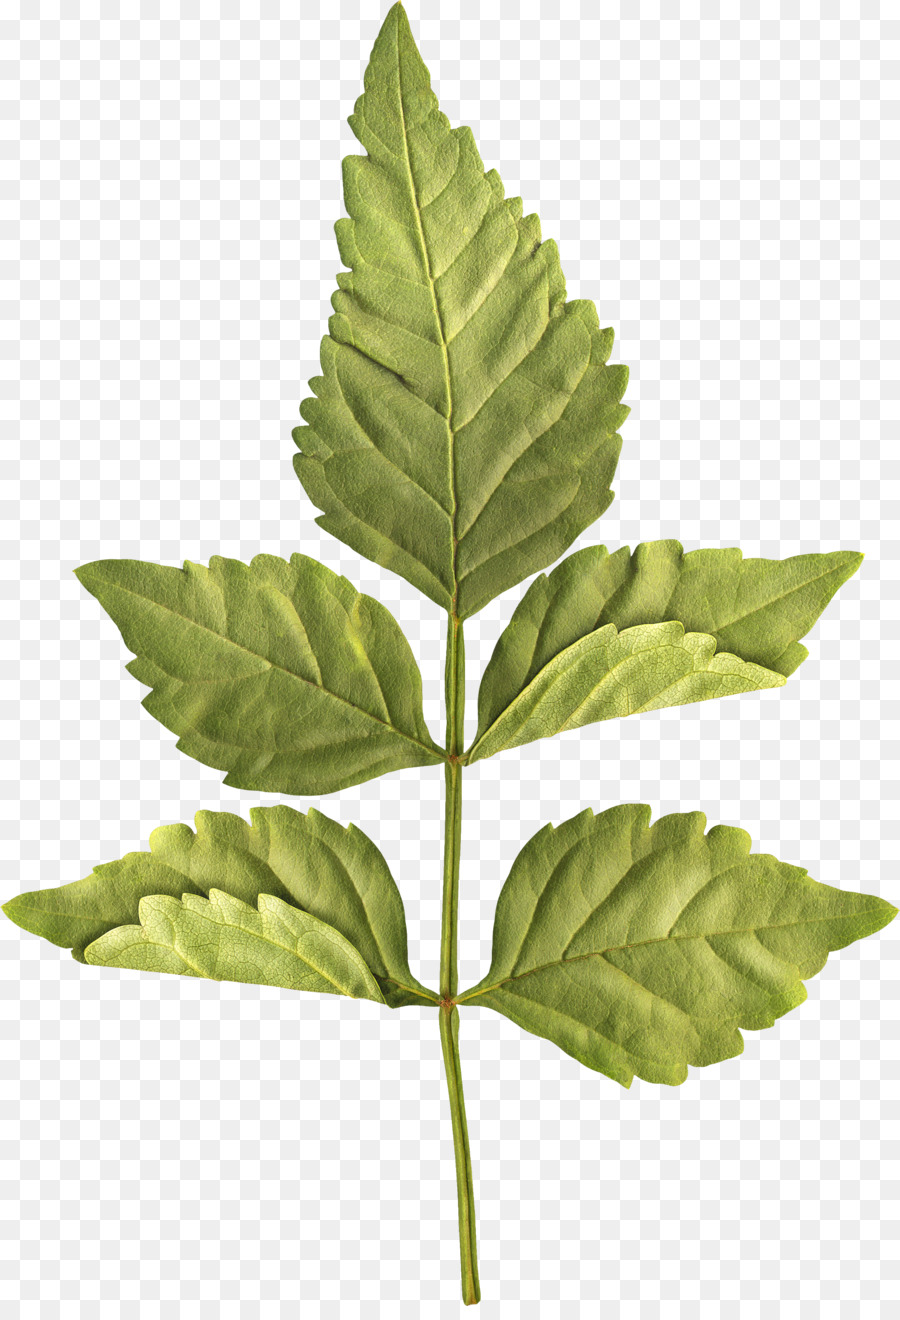 Foglia Centerblog staminali Vegetali - foglie verdi